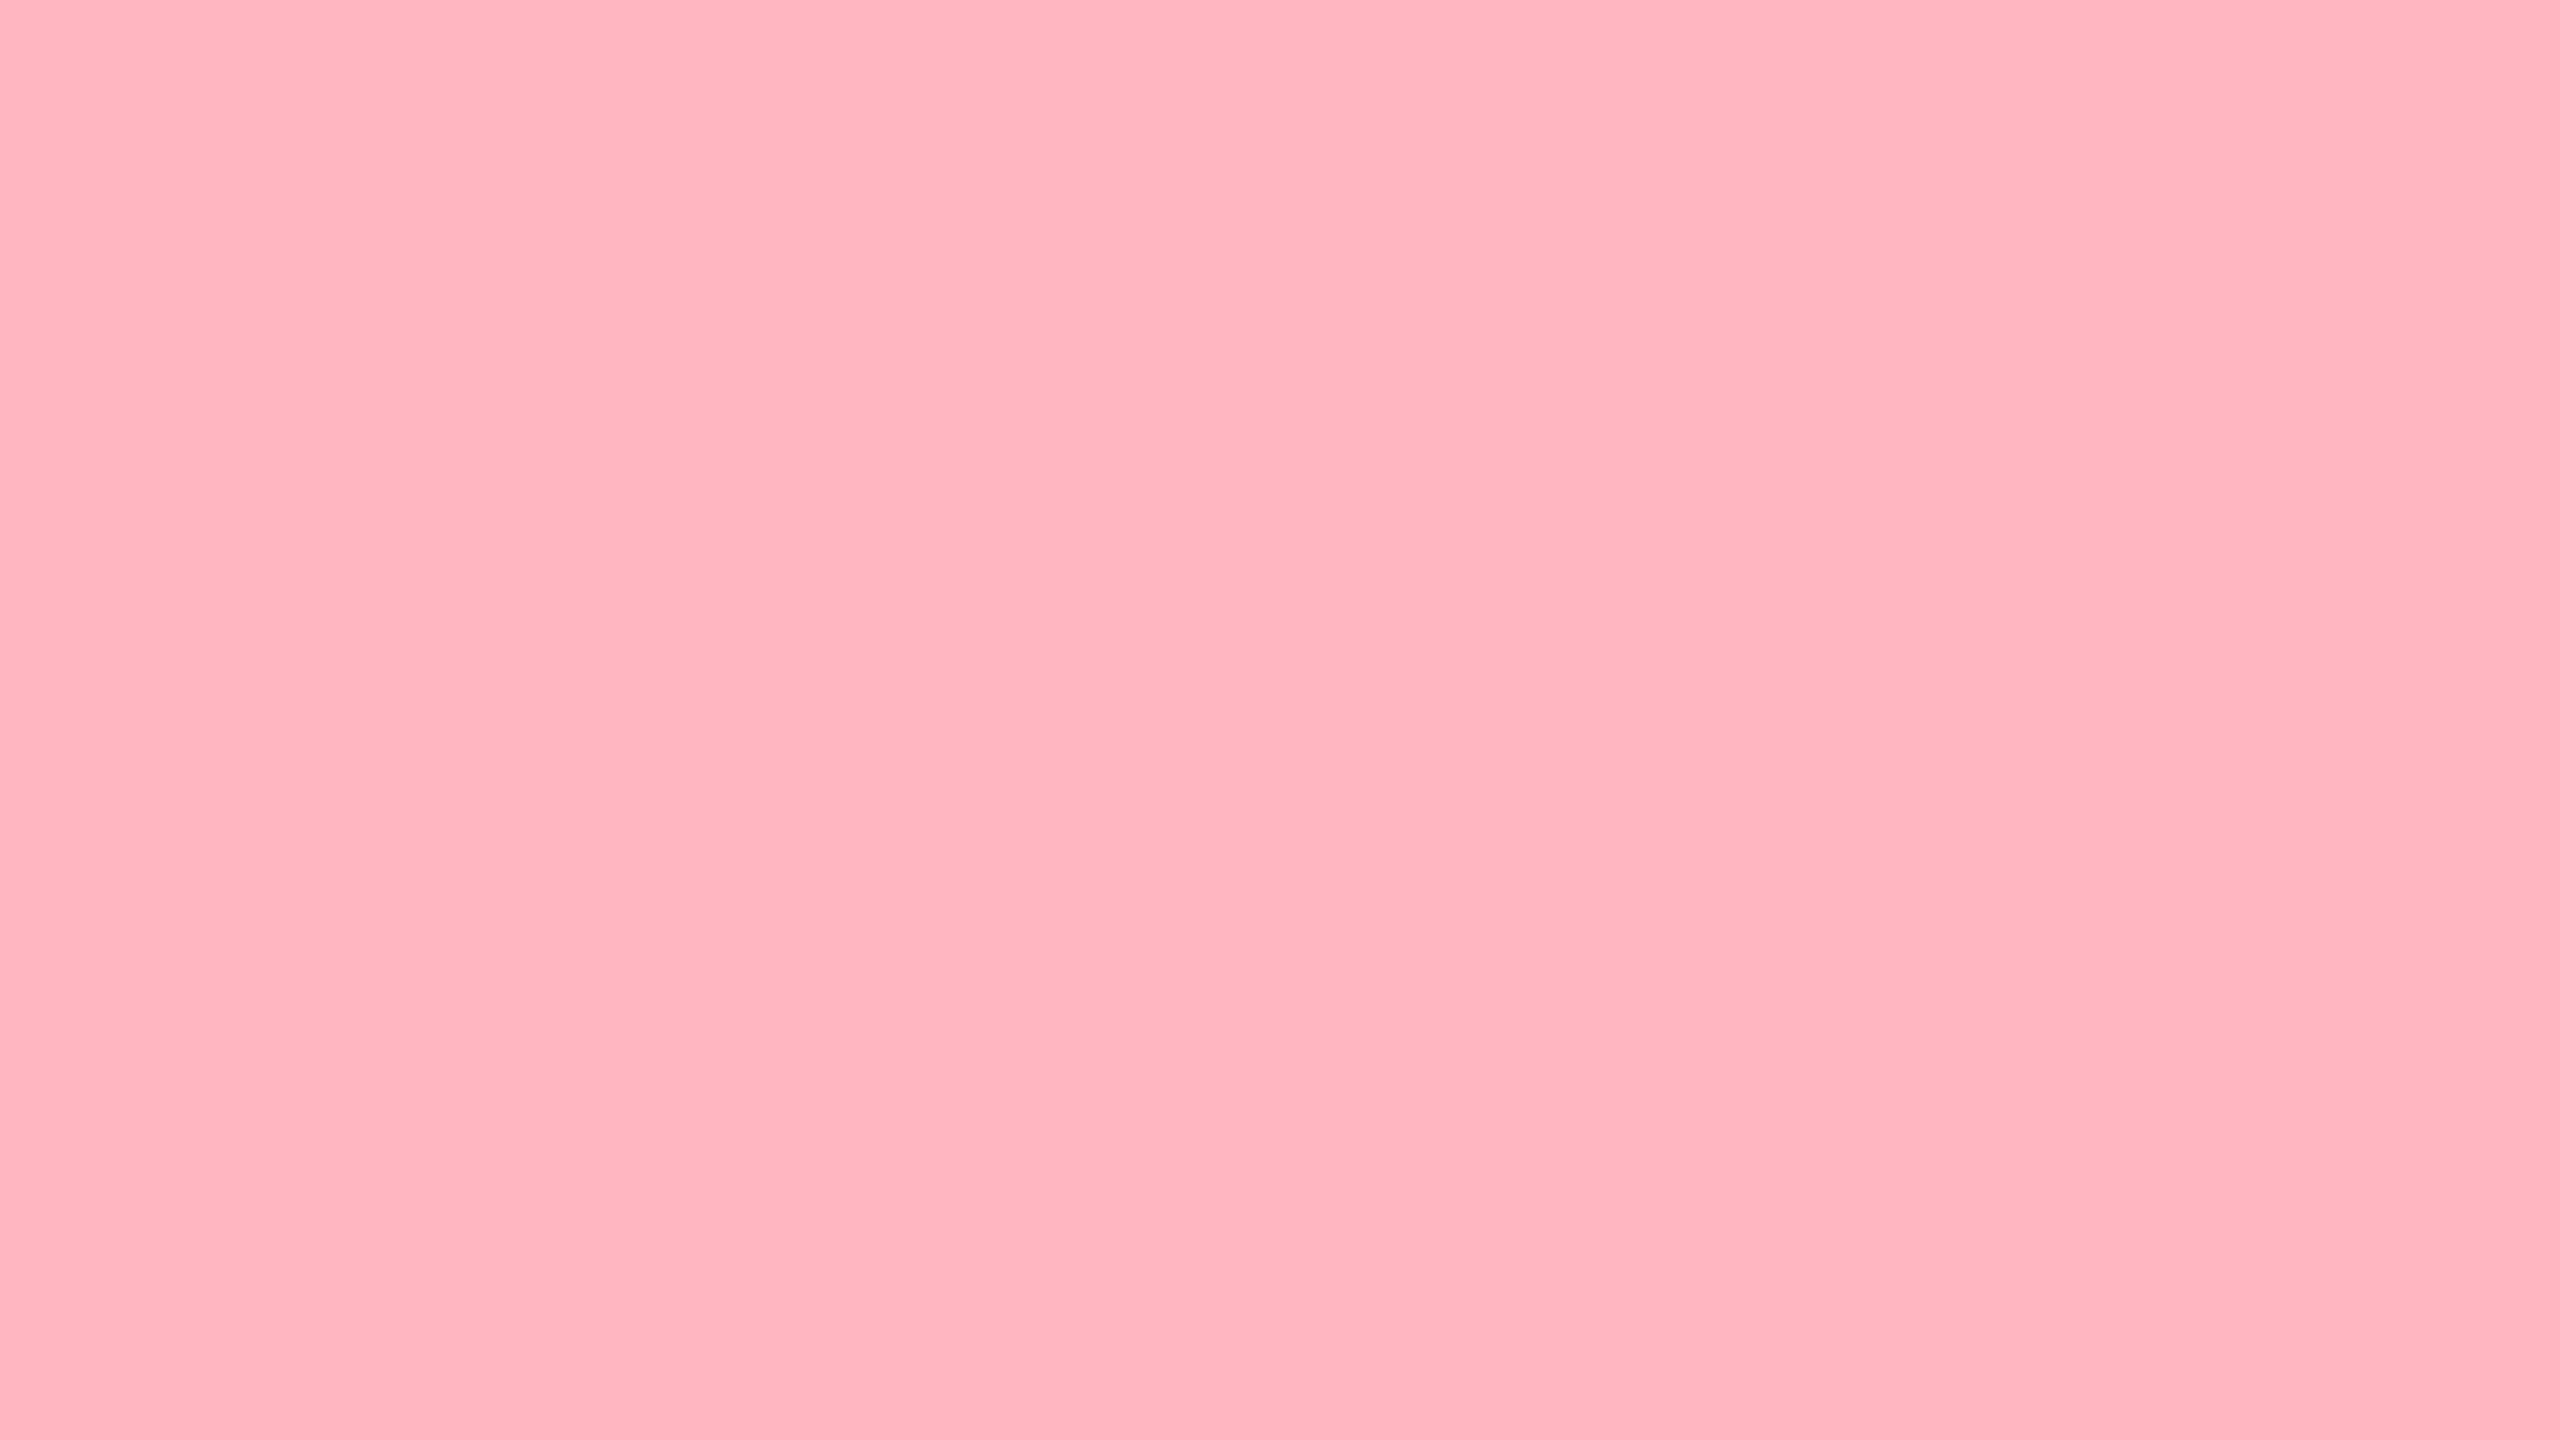 Tumblr Backgrounds Light Pink HD Wallpapers on picsfaircom